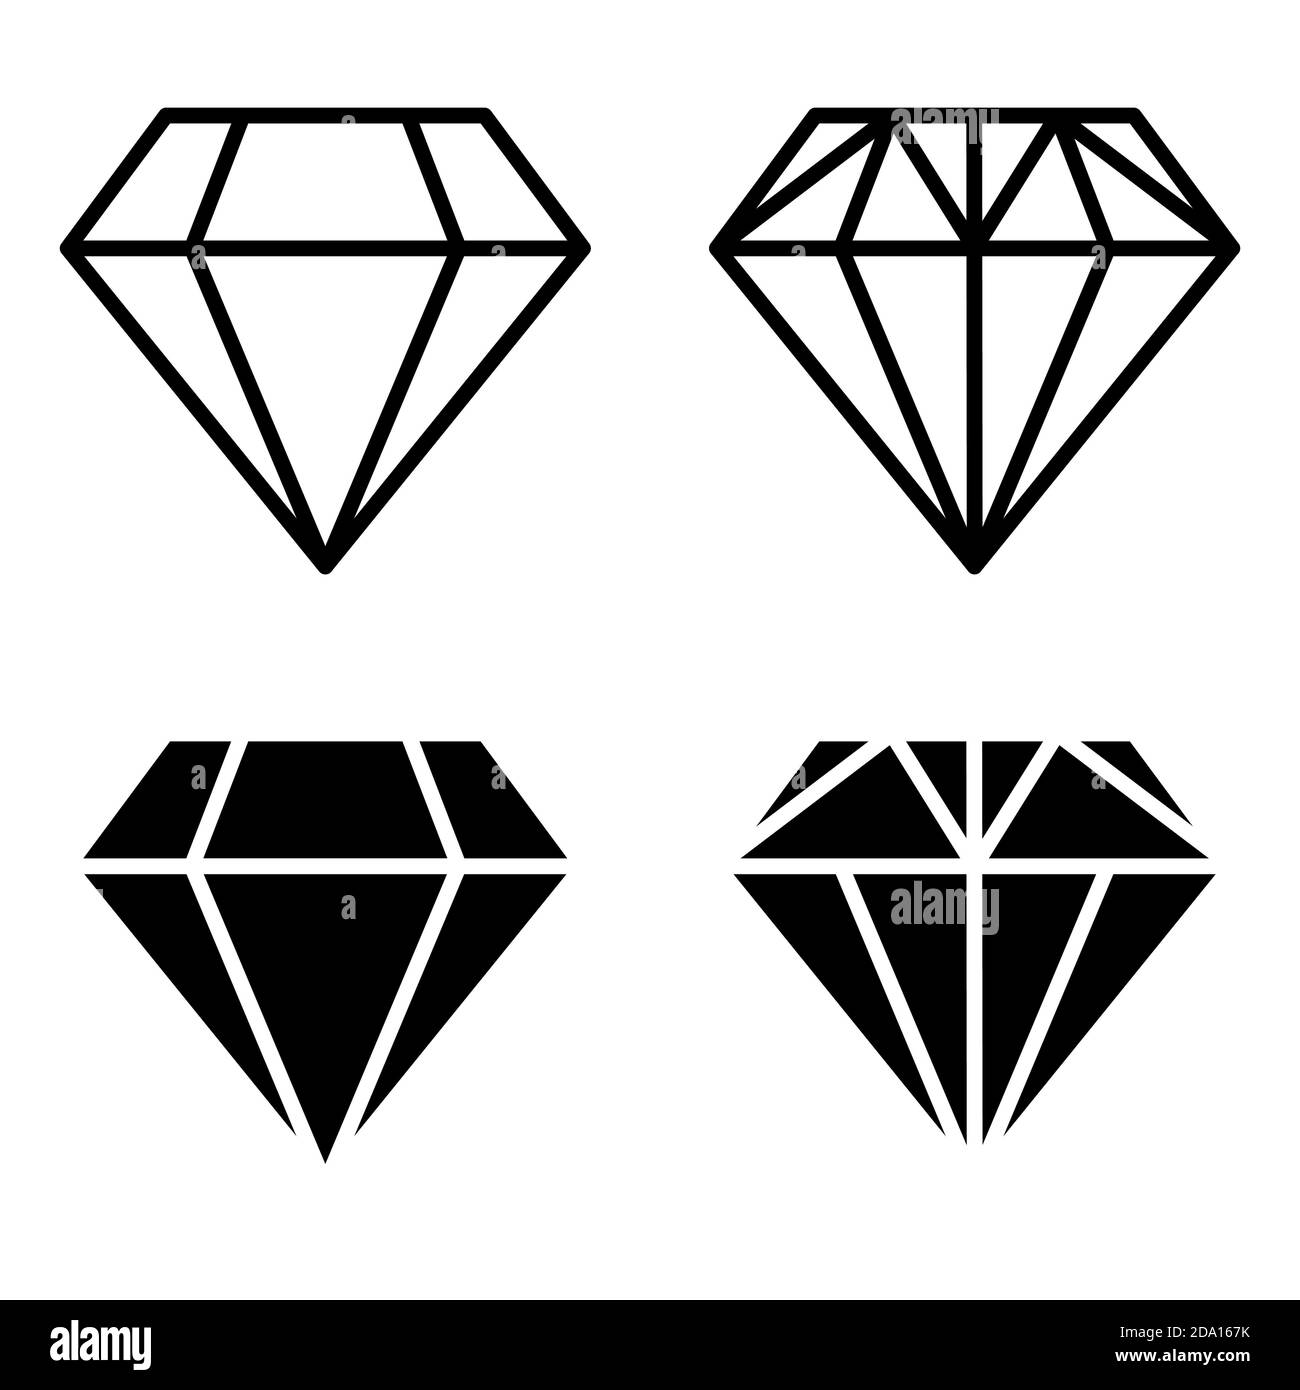 Diamond icon set. Four gem stones symbols isolated on white background. Stock Vector